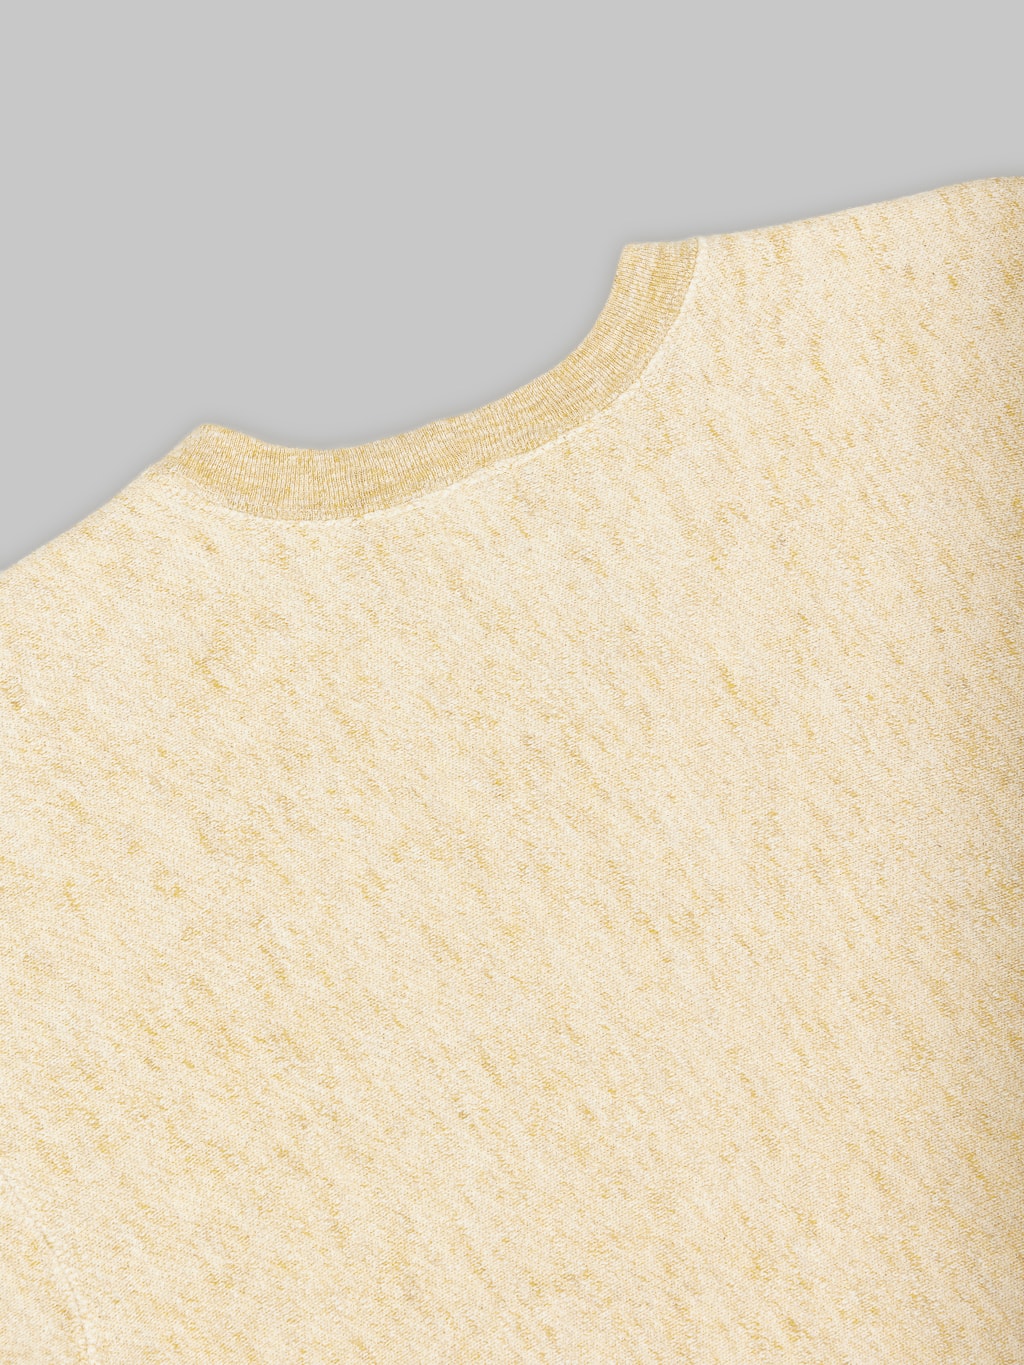 loop and weft big loopback fleece side panel sweatshirt mustard back neck